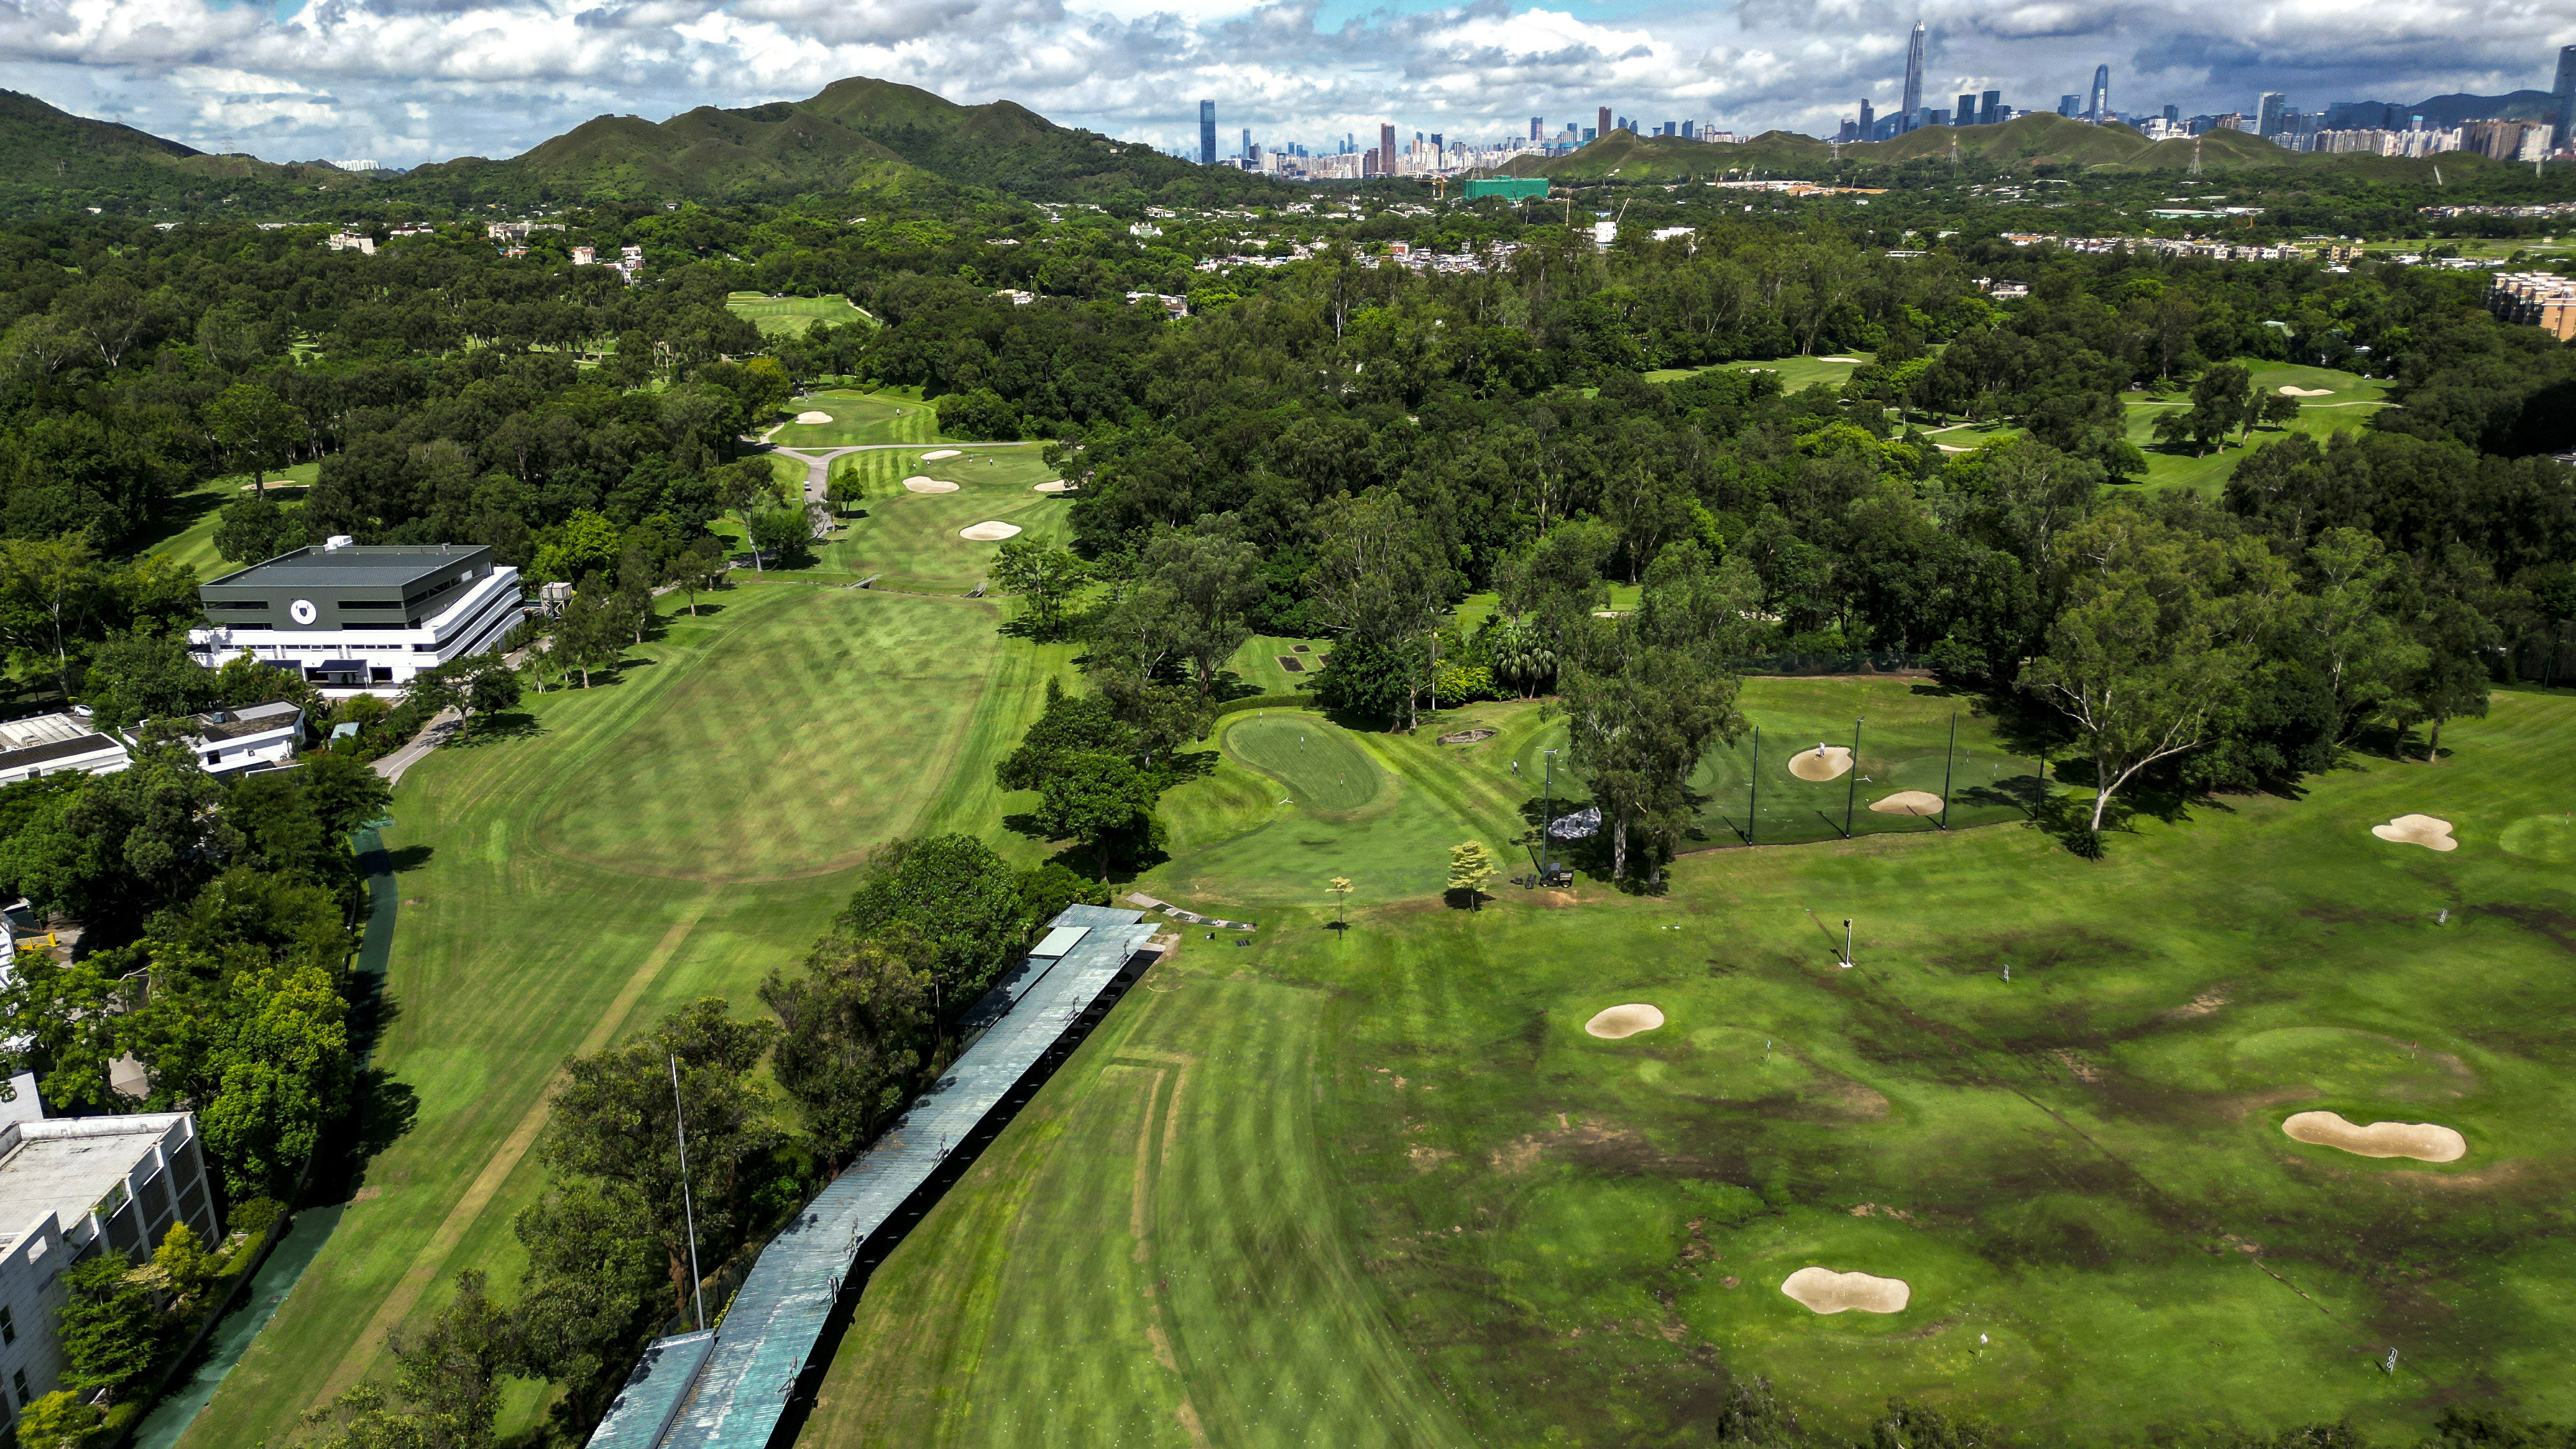 The exclusive Hong Kong Golf Club leases the Fanling site. Photo: Sam Tsang